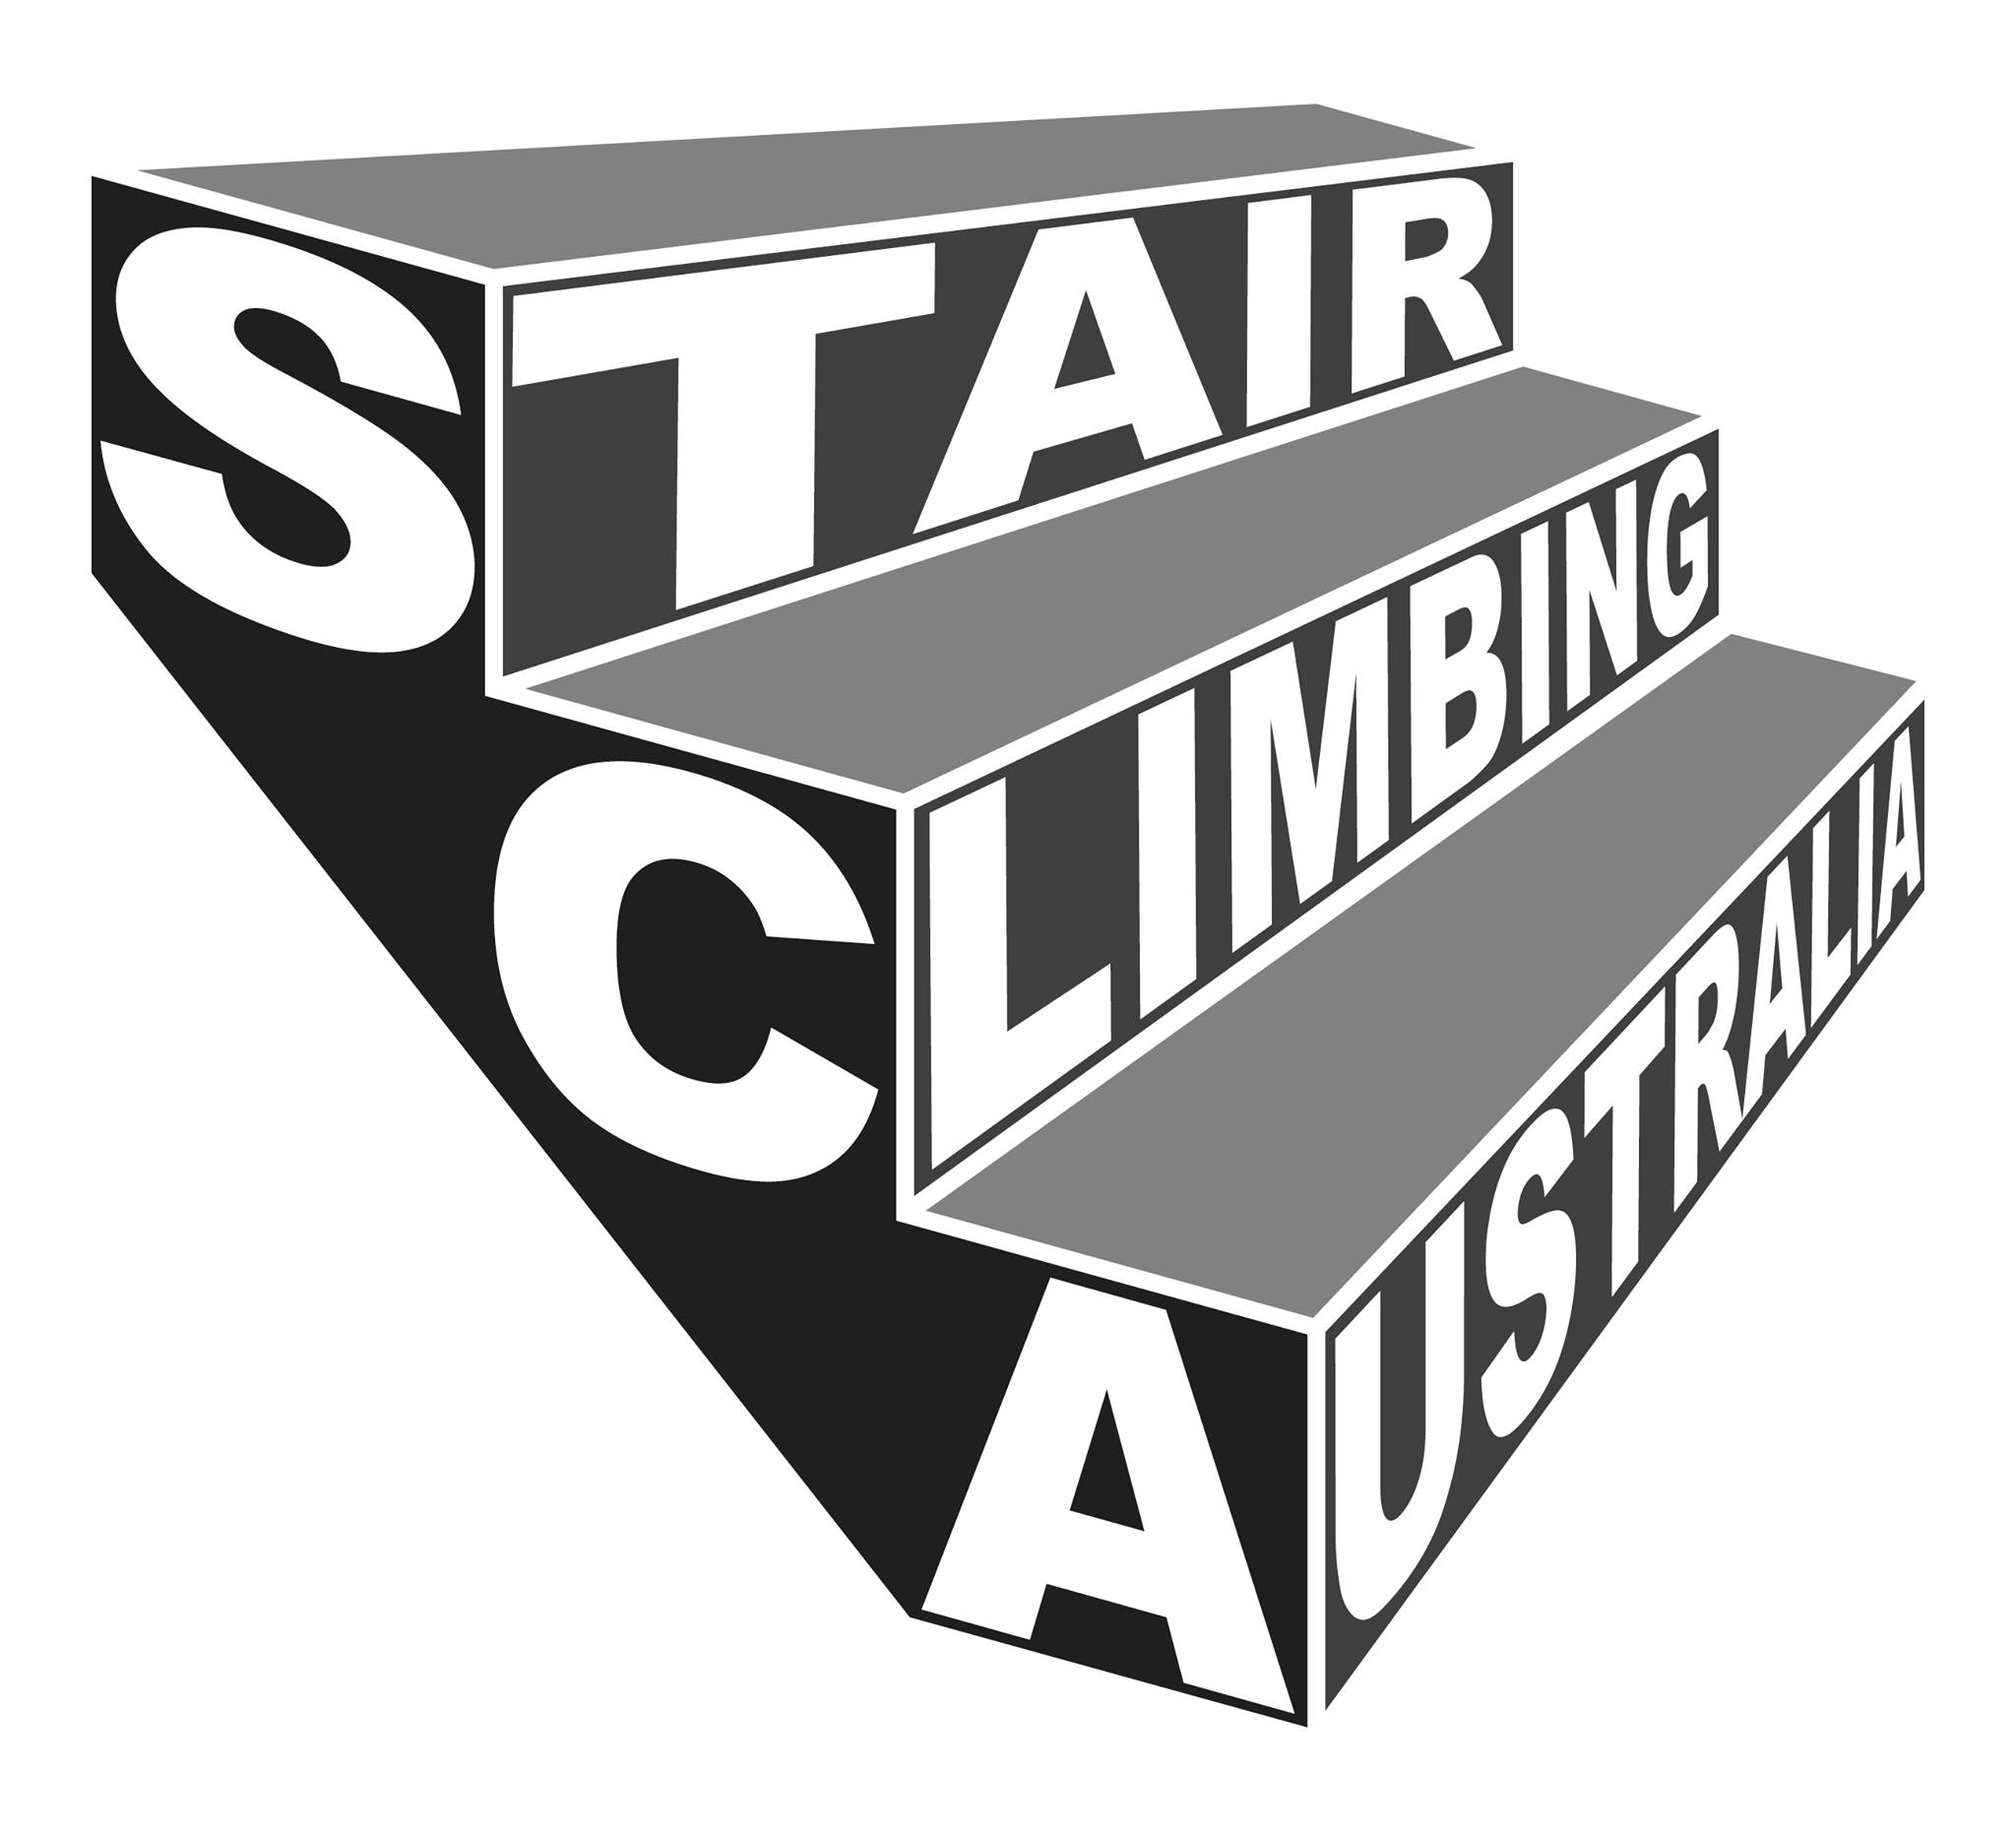 Stair Climbing Australia